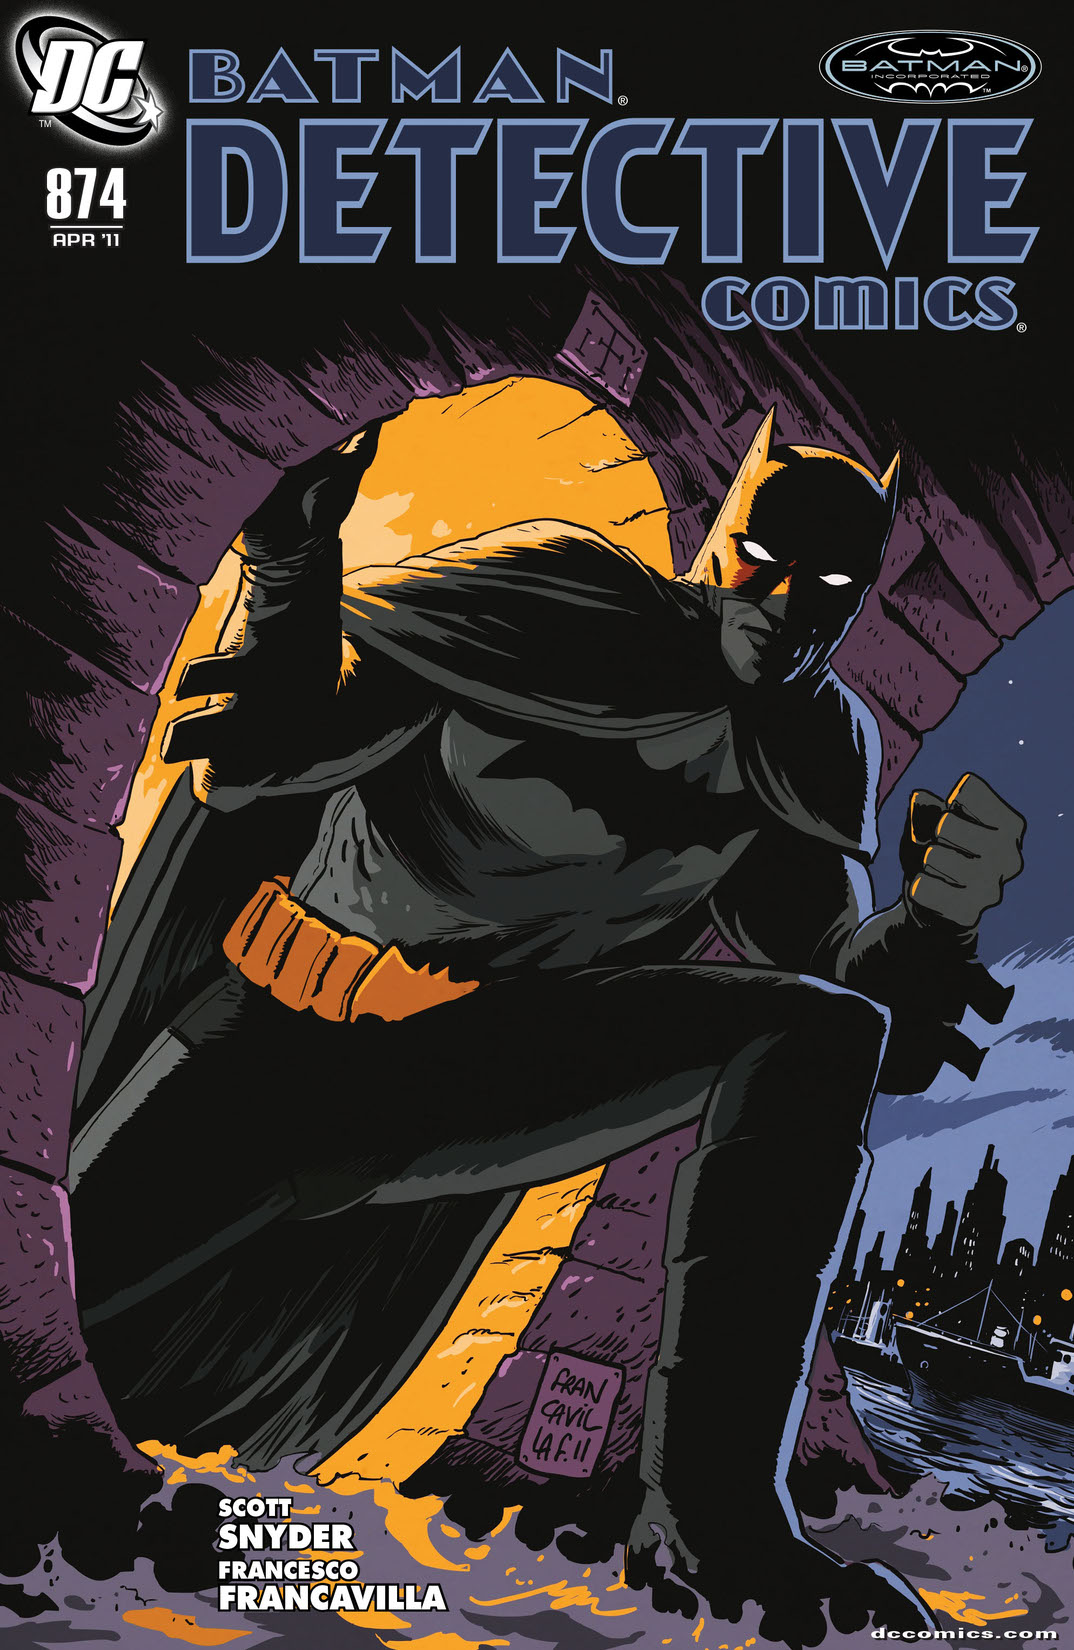 Detective Comics (1937-) #874 preview images